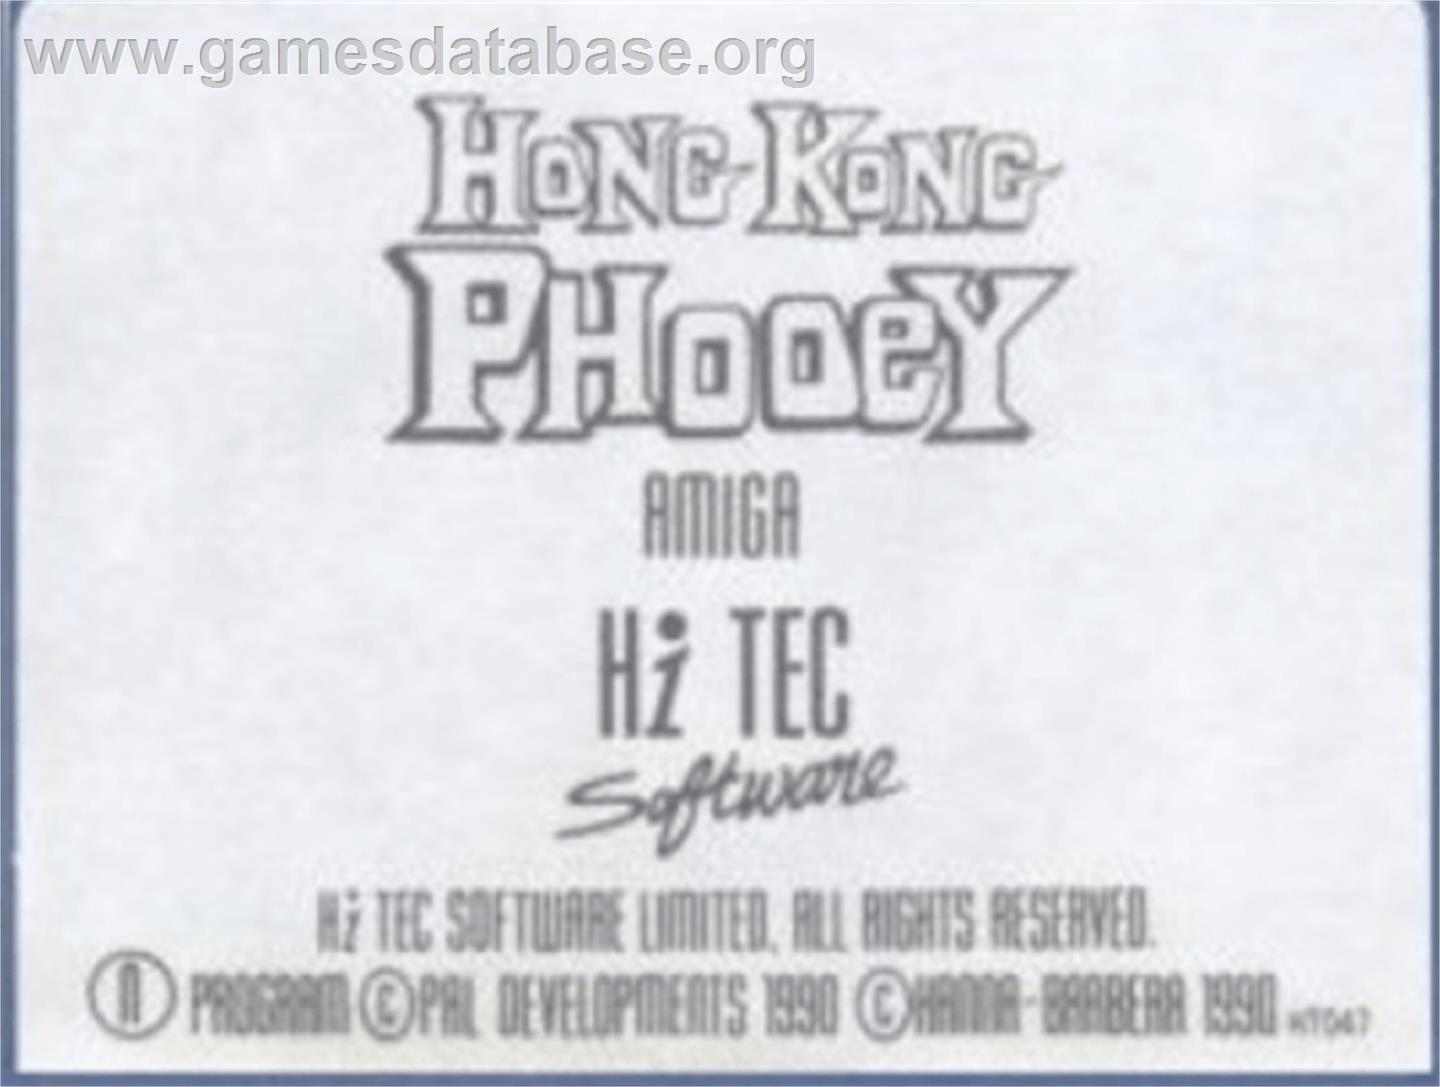 Hong Kong Phooey: No.1 Super Guy - Commodore Amiga - Artwork - Cartridge Top